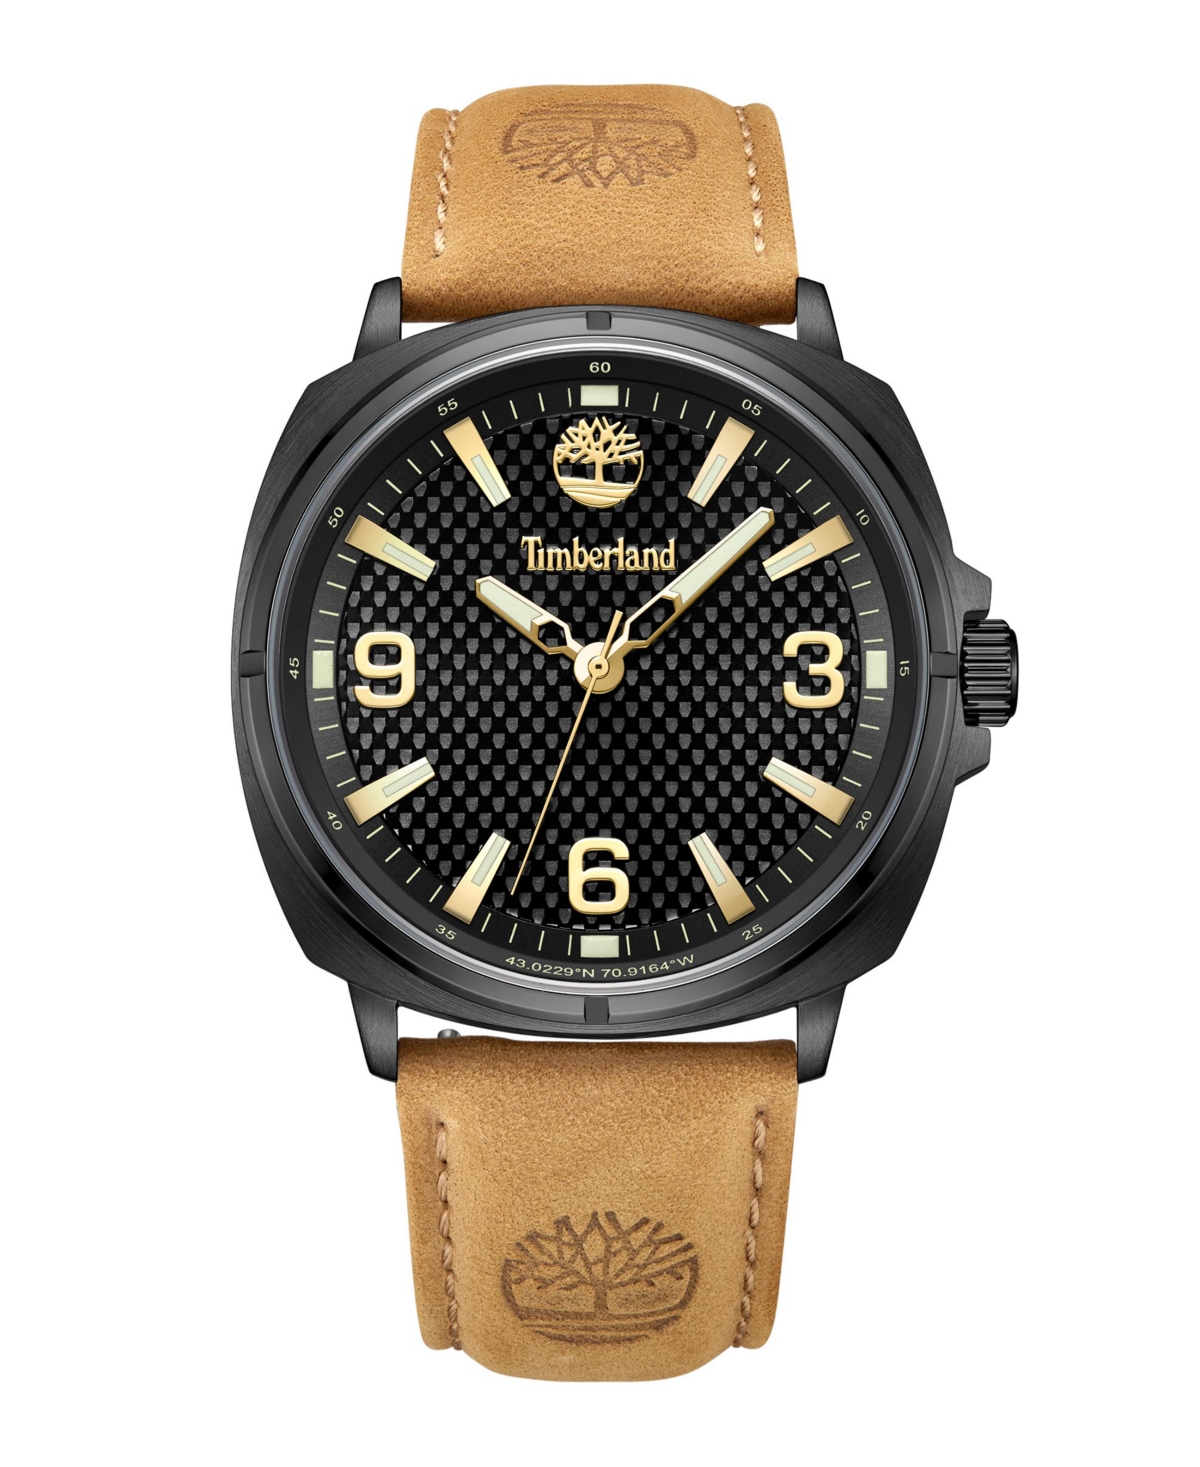 Men's Bailard Wheat Genuine Leather Strap Watch, 44mm - Wheat